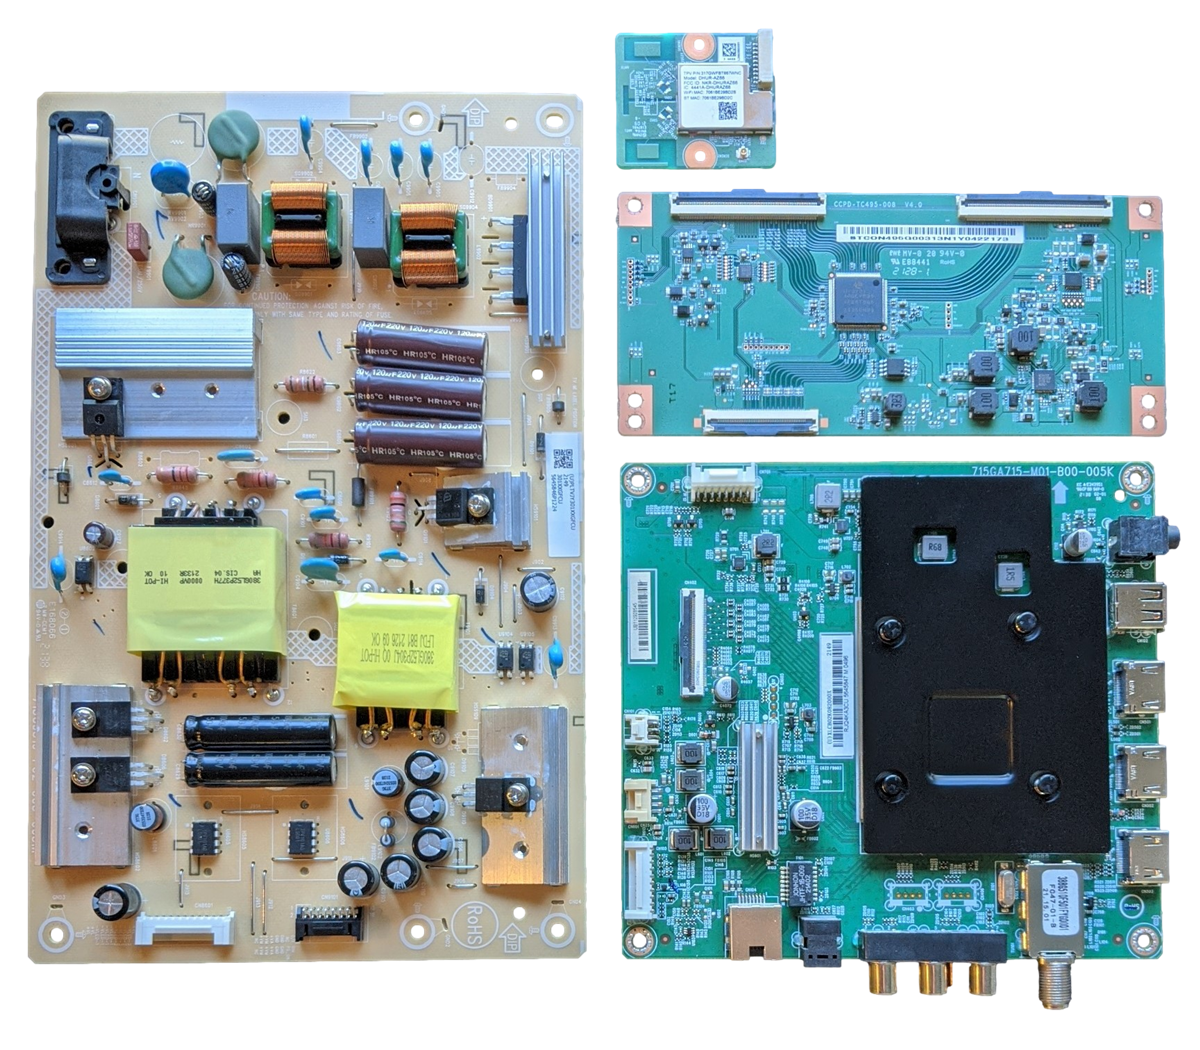 NS-50F301NA22 Insignia TV Repair Parts Kit, 756TXLCB02K082000X Main Board, PLTVJY301XXGFCU Power Supply, STCON495G T-Con, 317GWFBT667WNC Wifi, NS-50F301NA22